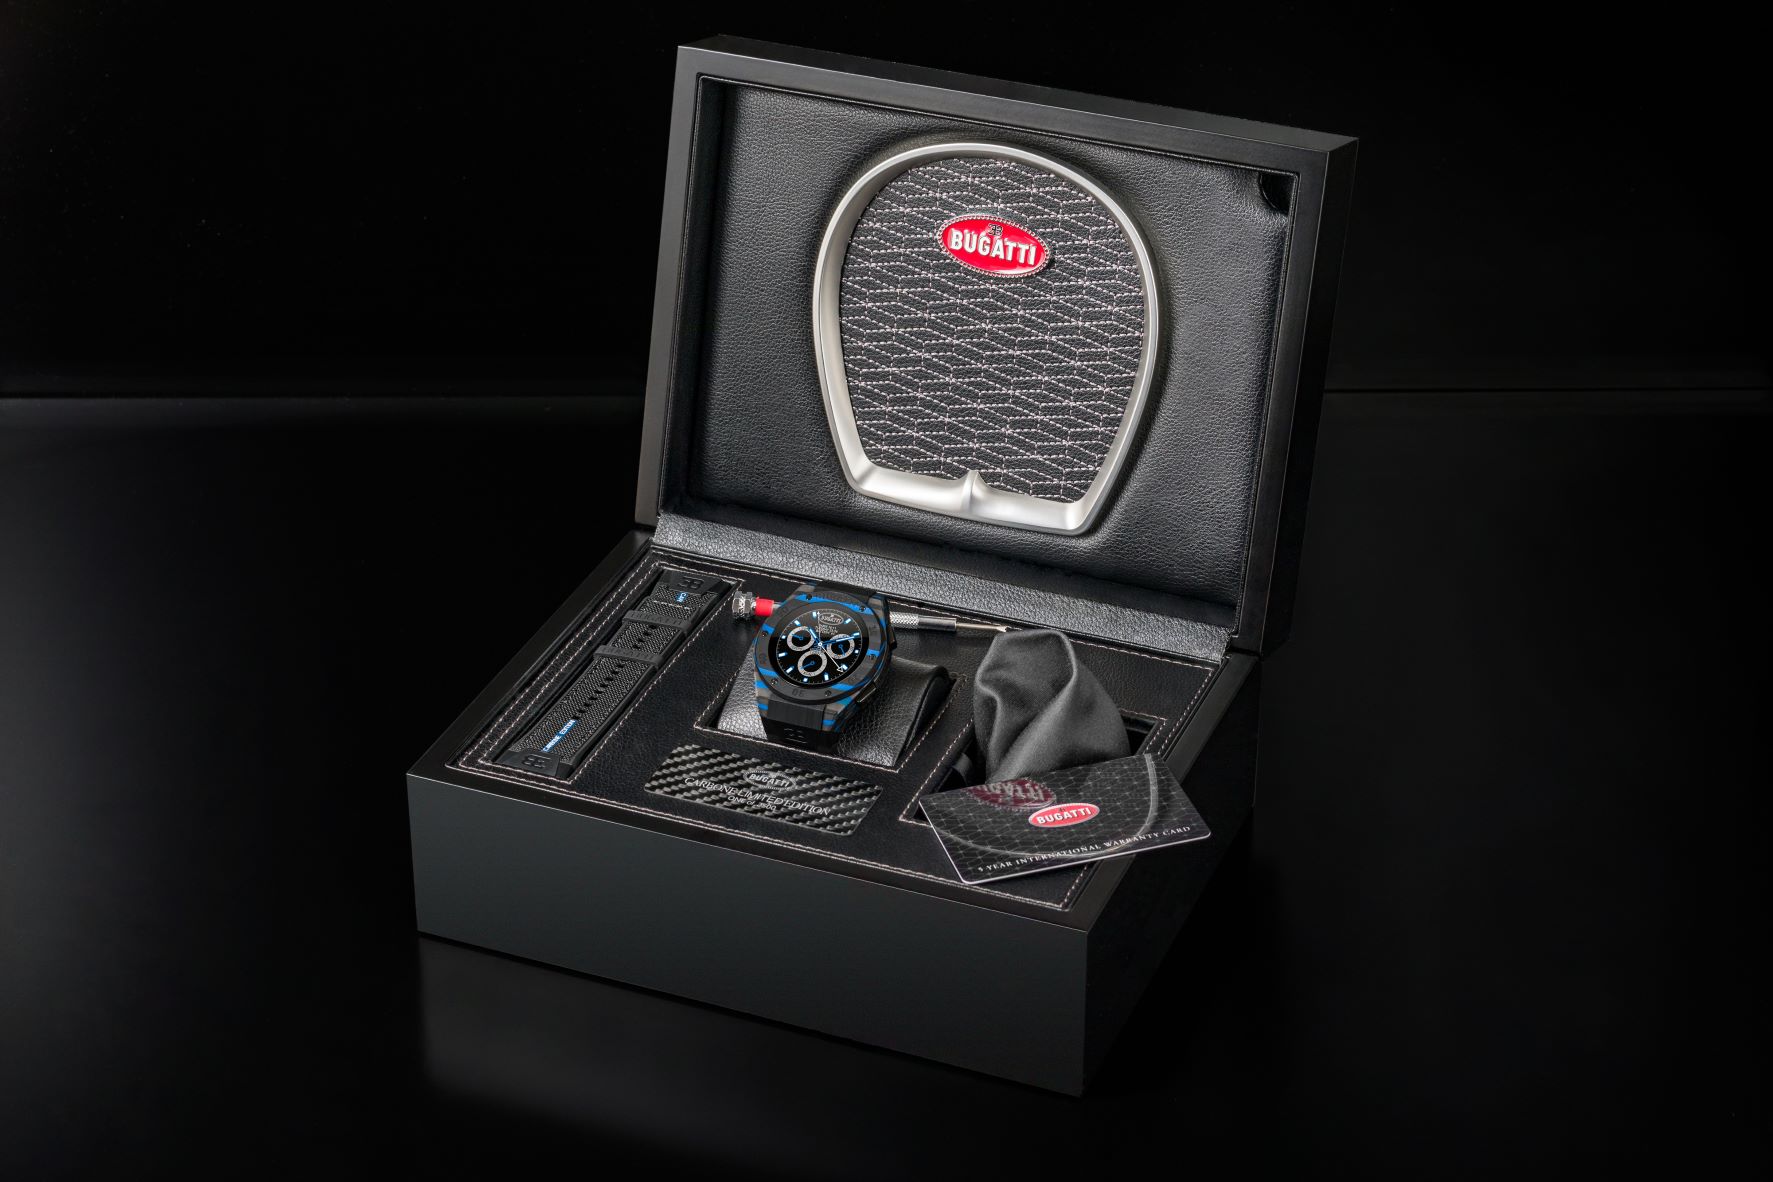 Presentation box for the Bugatti Carbone limited edition smartwatch